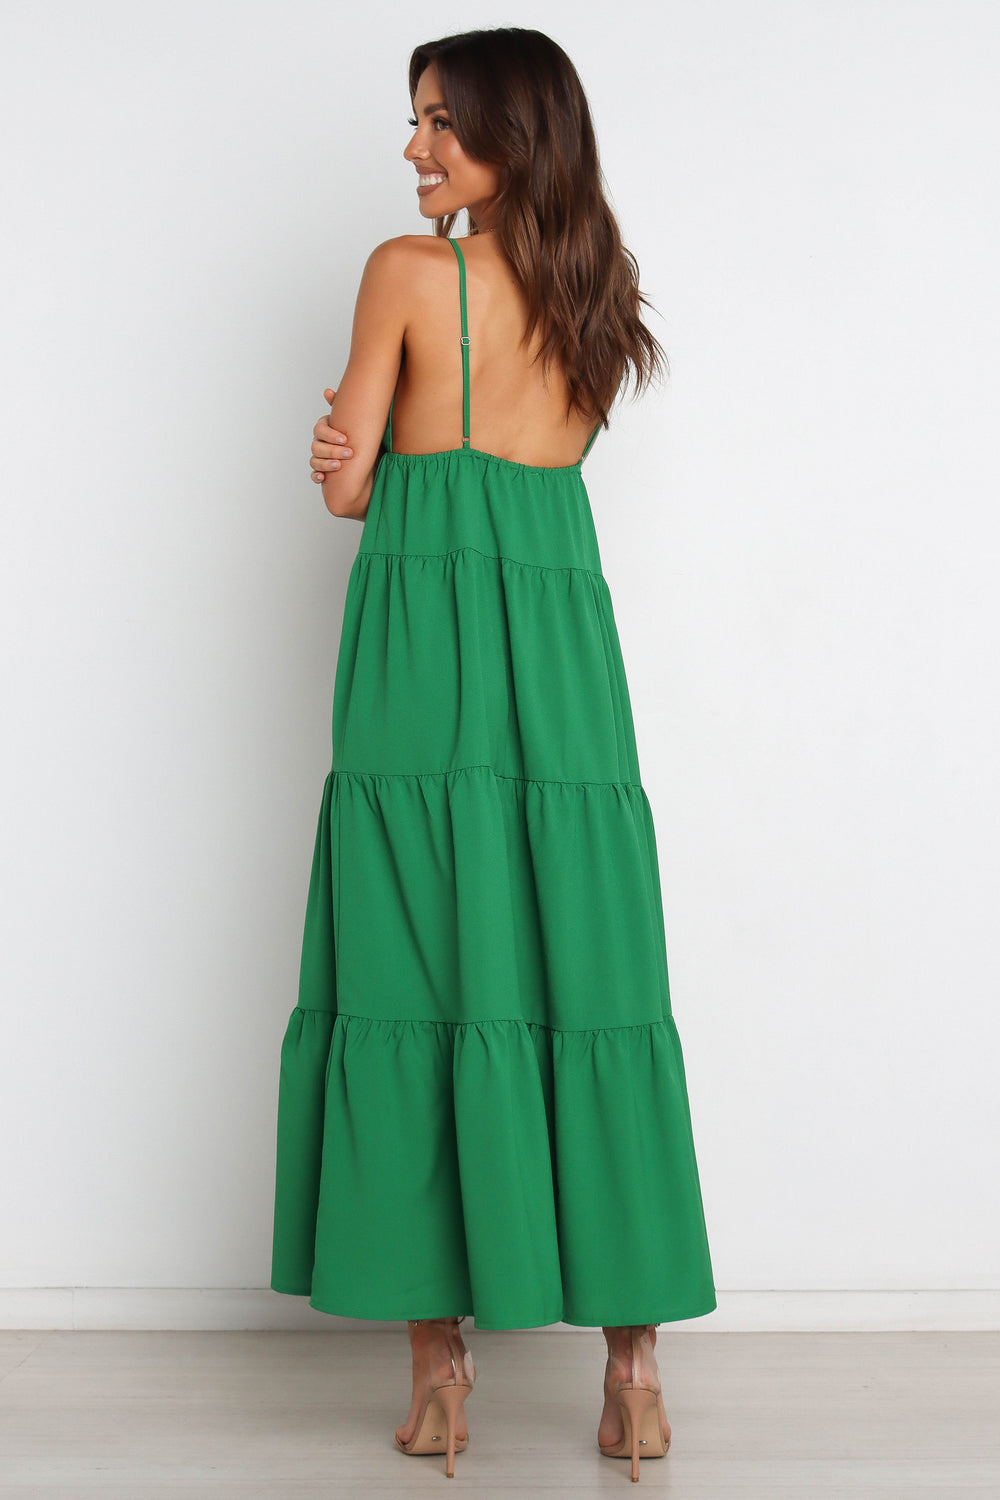 DRESSES @Indigo Dress - Green (waiting on bulk)